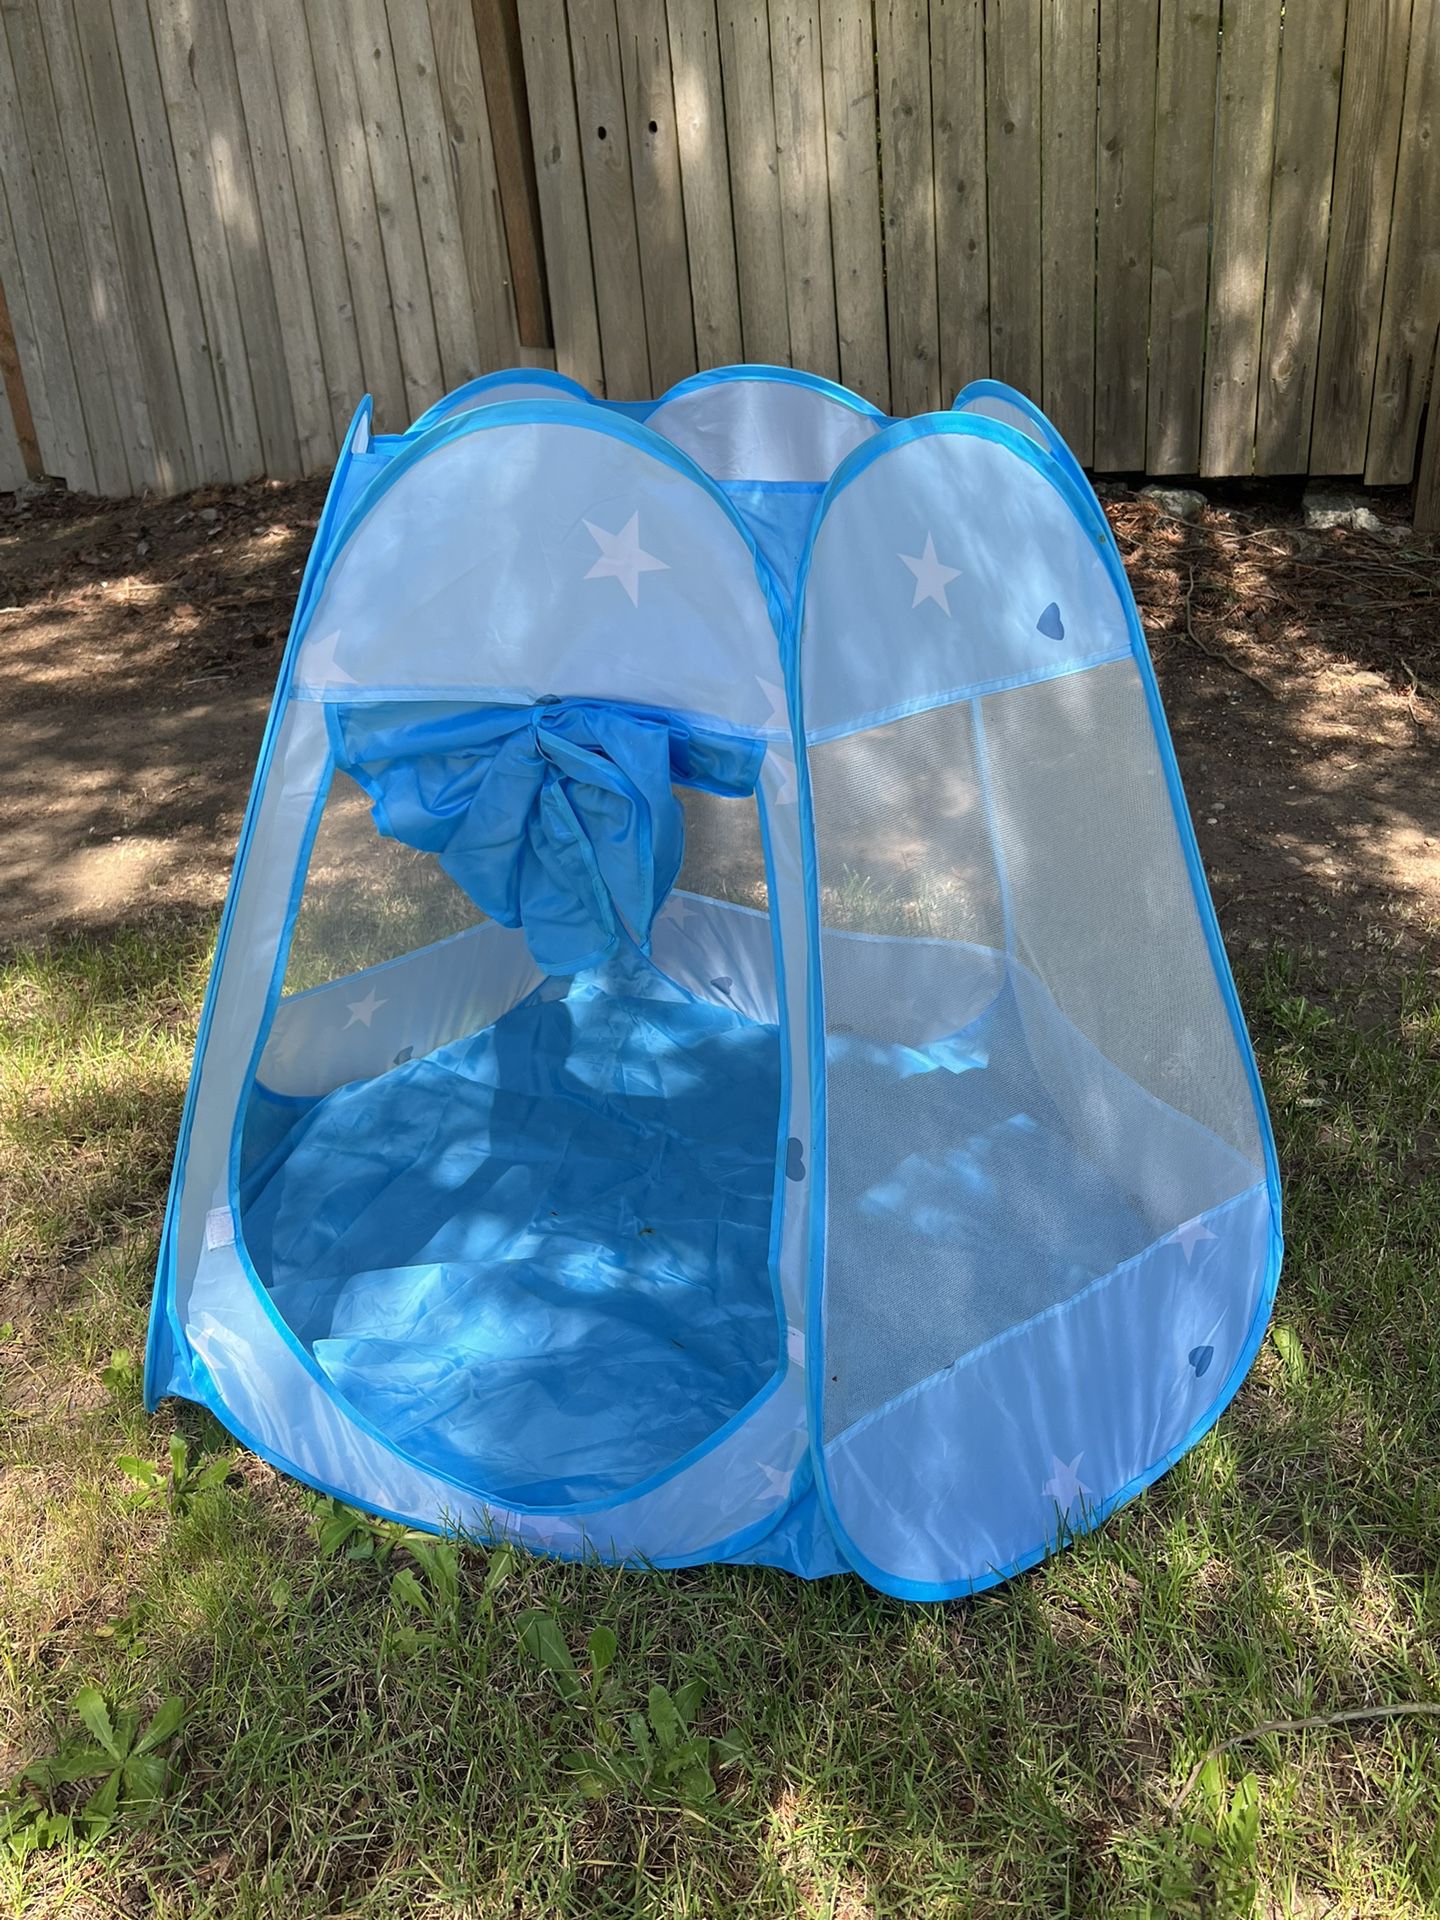 Free Baby Tent